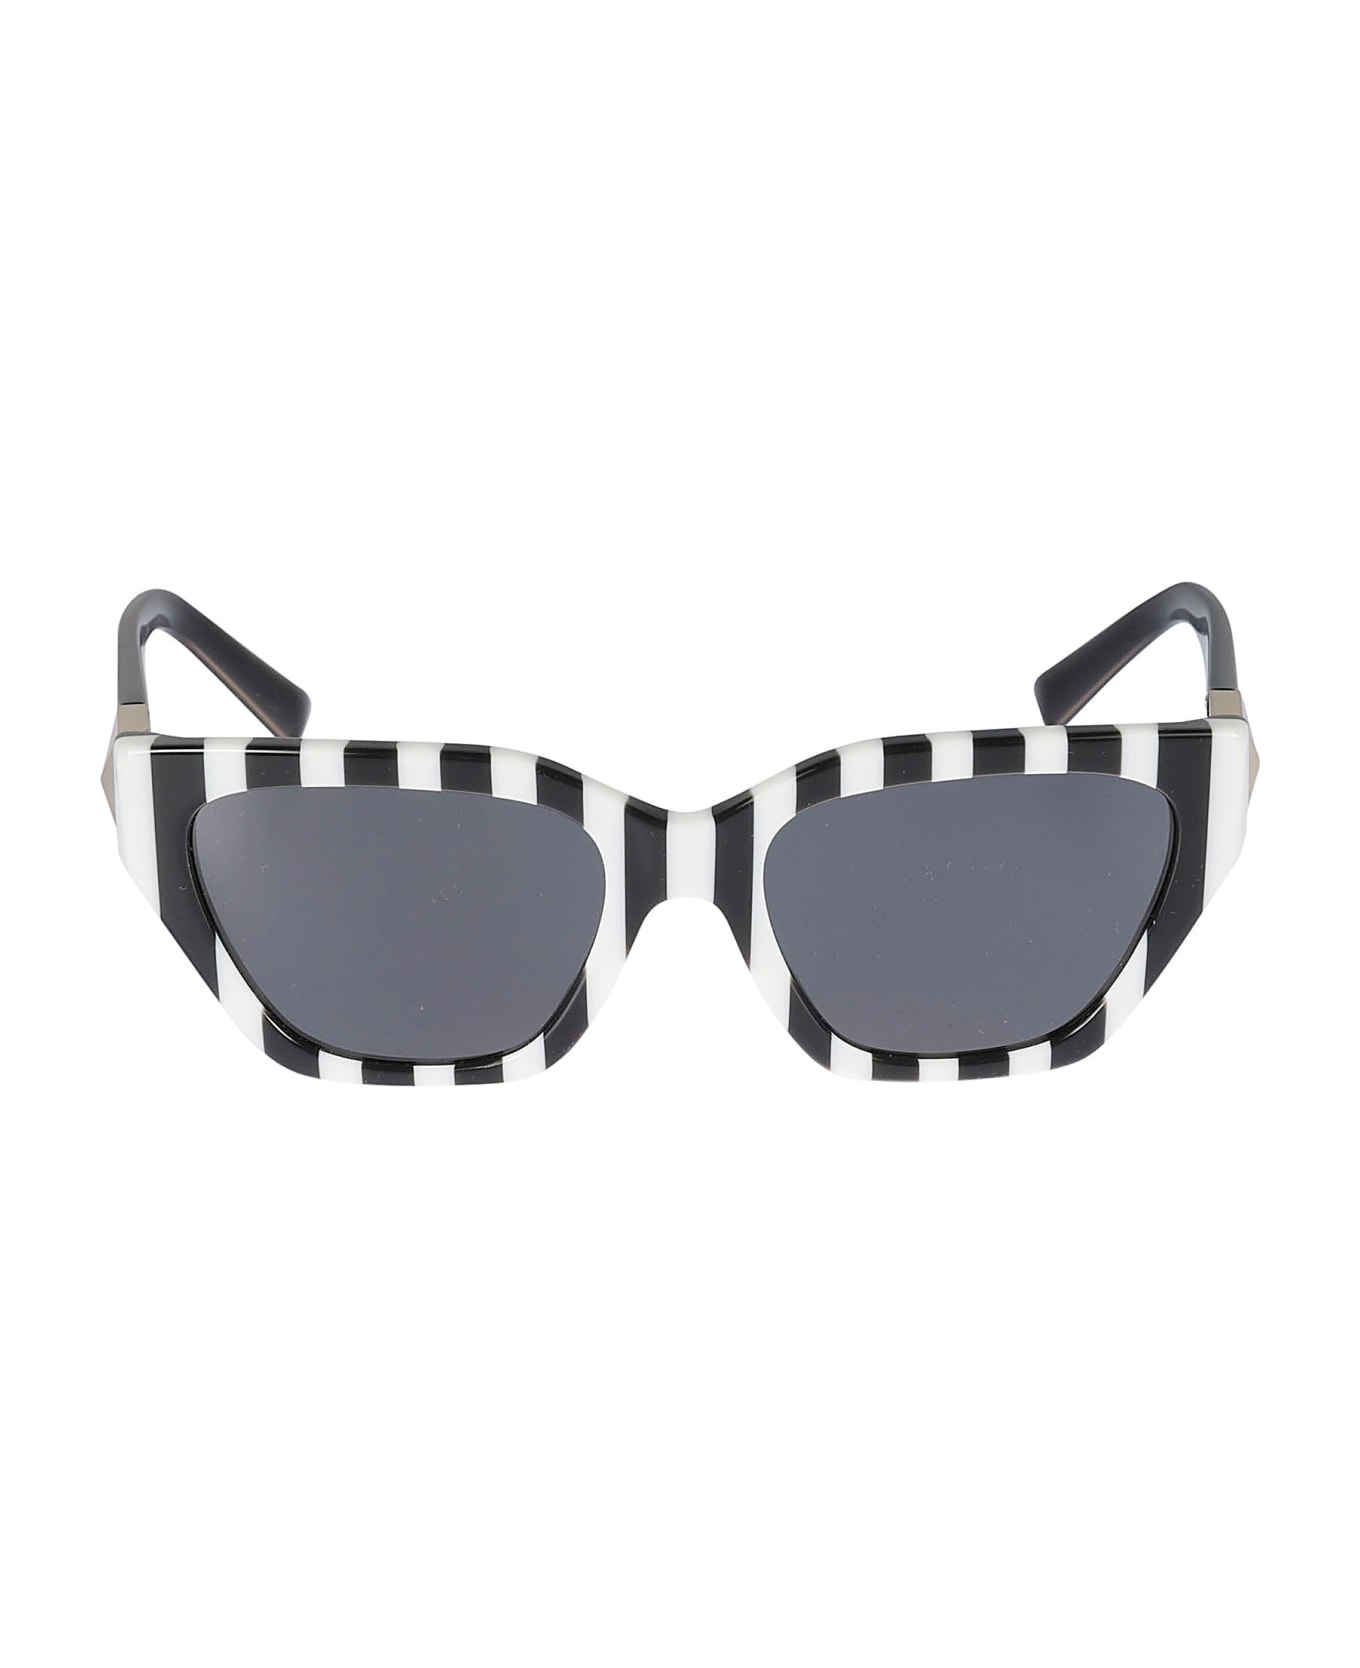 Valentino Eyewear Sole518187 Sunglasses - 518187